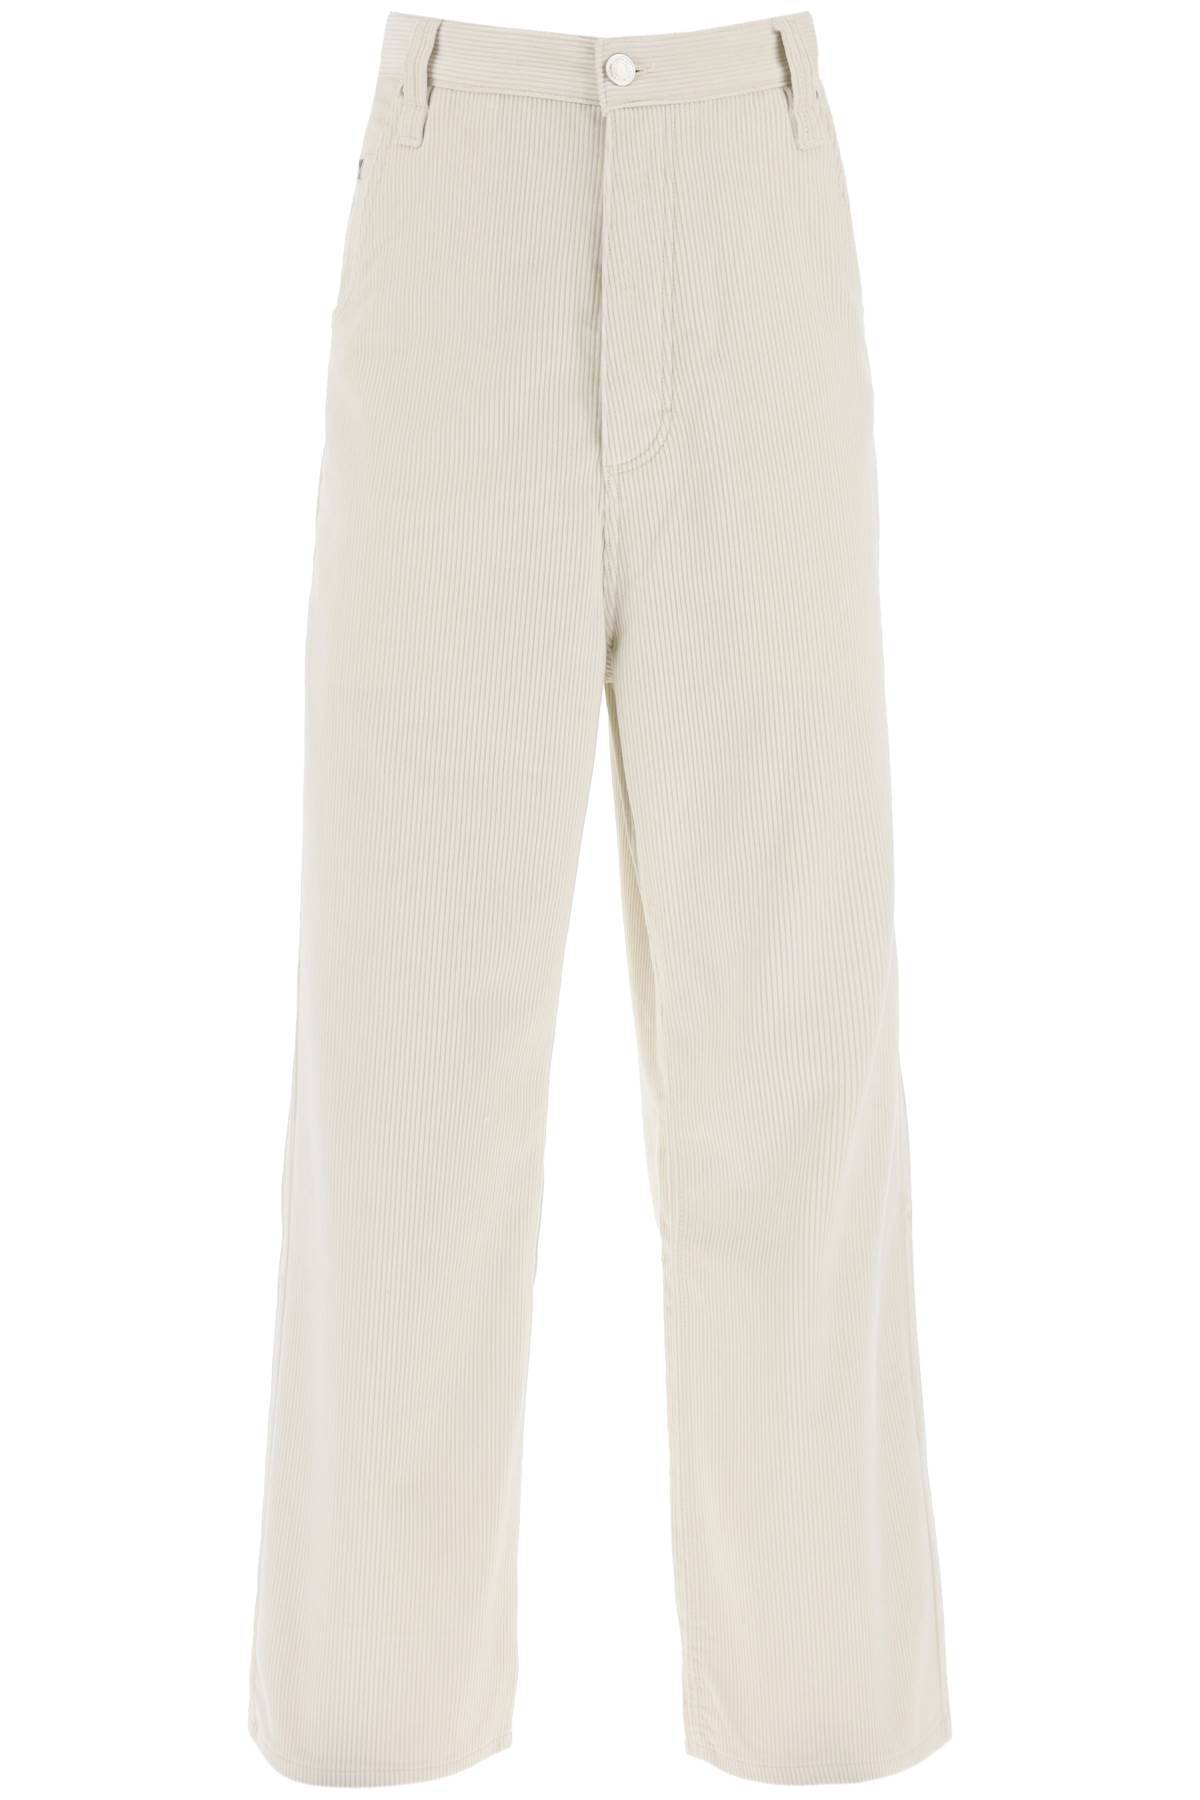 Shop Ami Alexandre Mattiussi Corduroy Pants In White